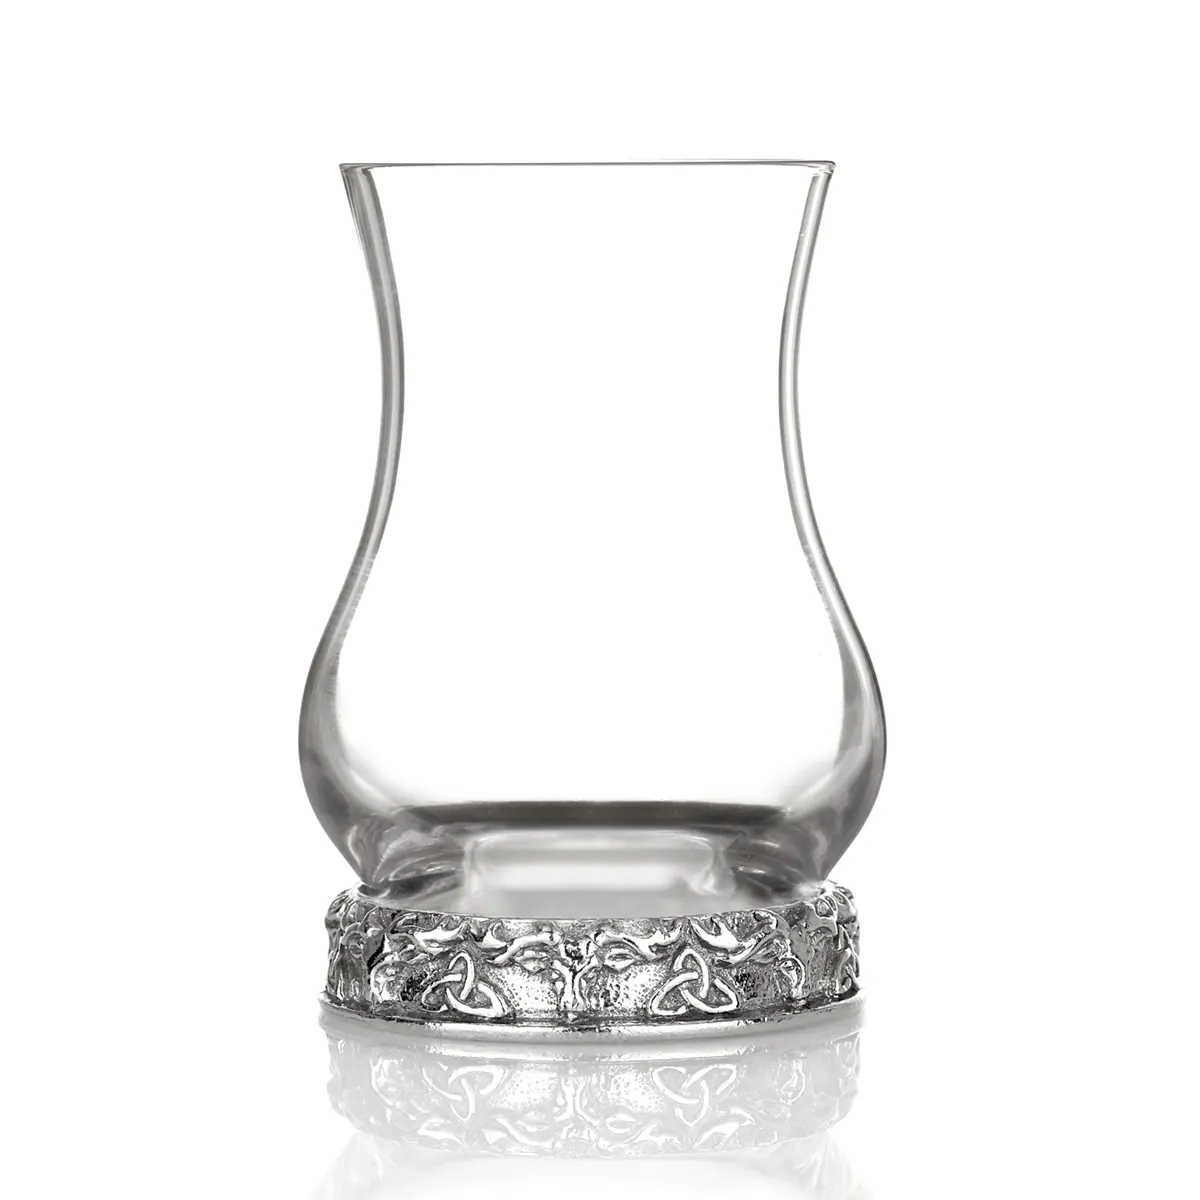 Highland Stag Whisky Tasting Glas - Handgefertigtes Whiskyglas aus England